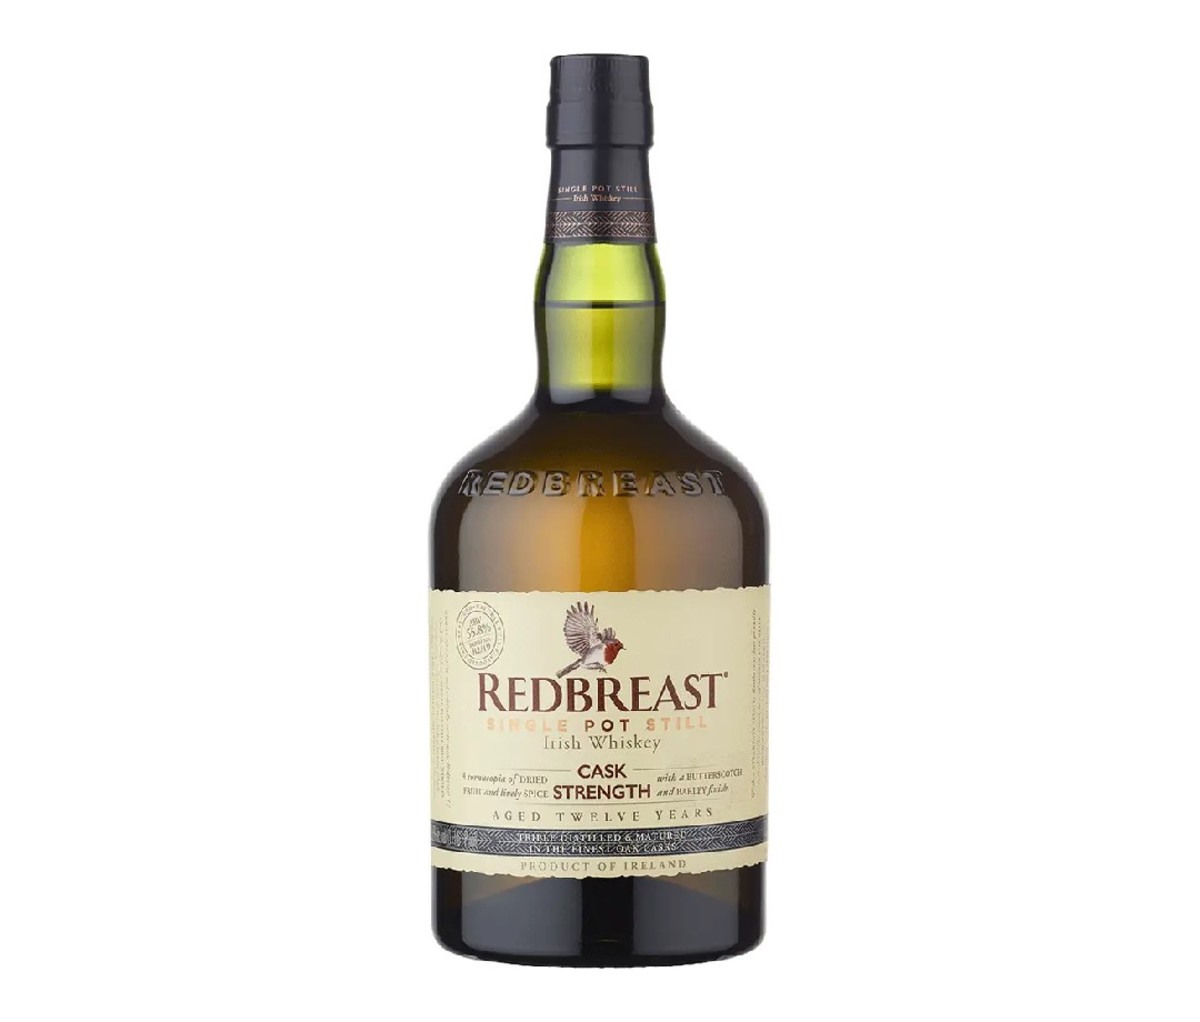 A bottle of Redbreast Cask Strength 12 Year Irish Whiskey.